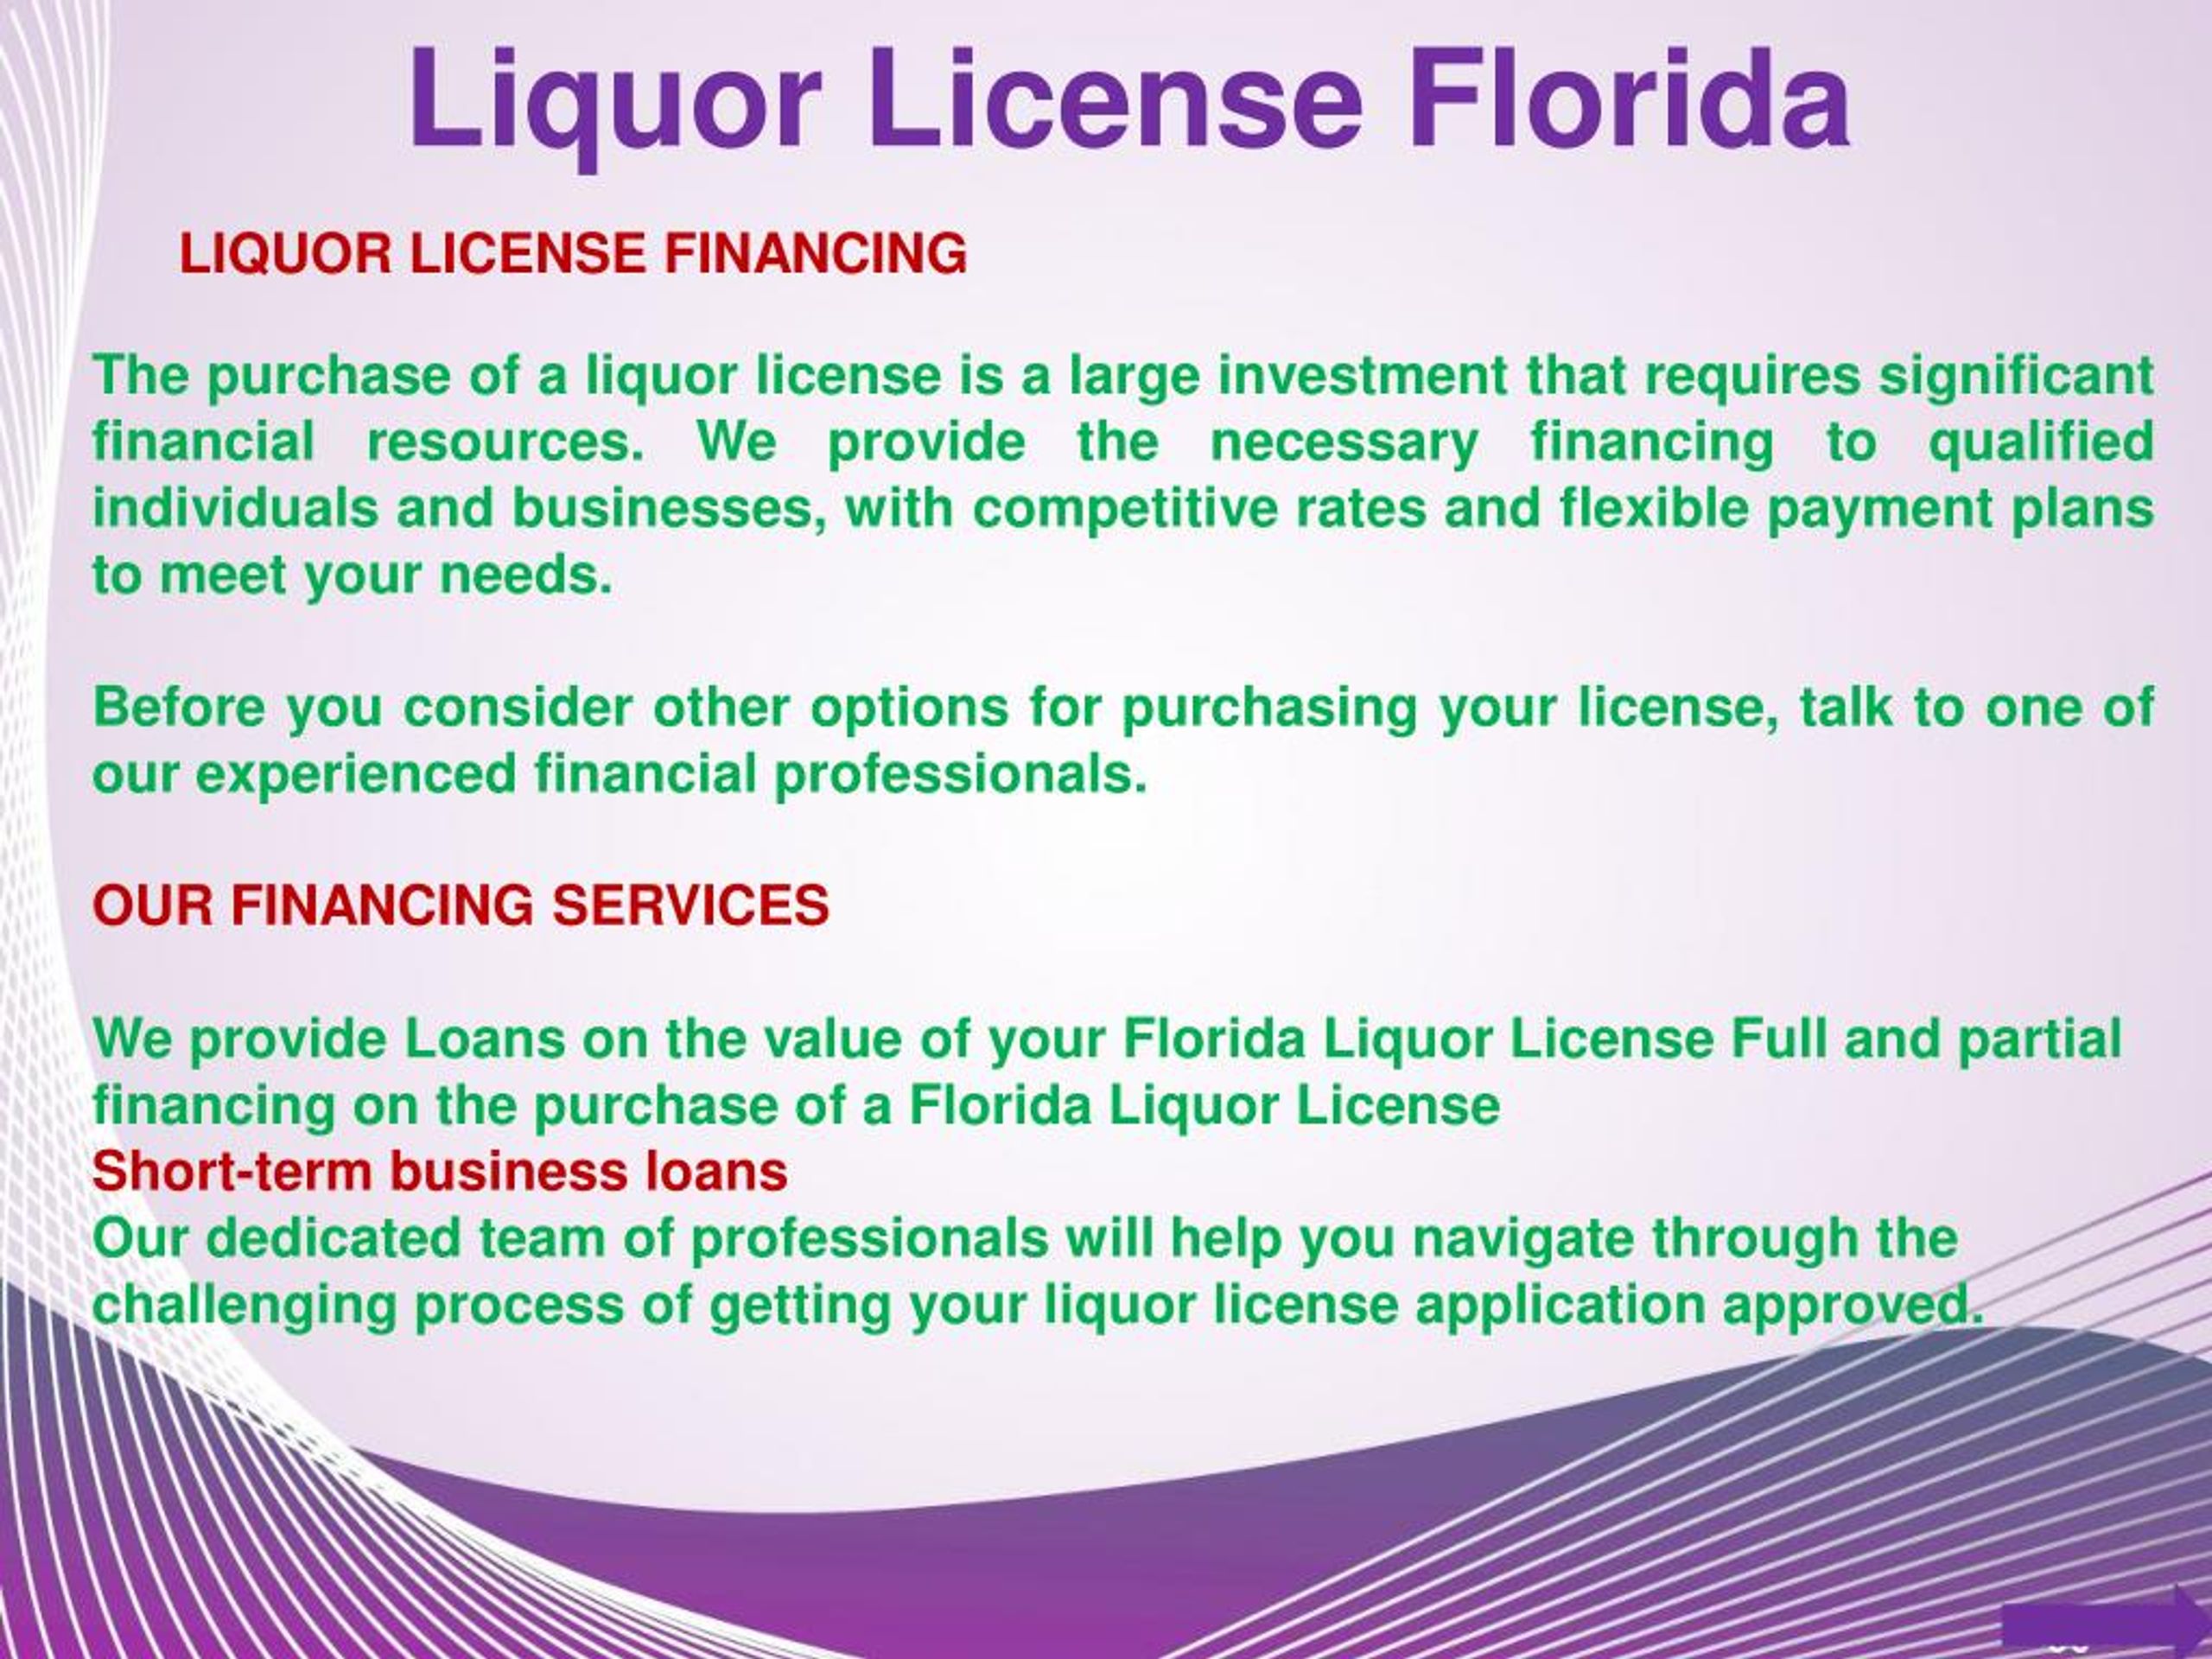 PPT Liquor License Florida PowerPoint Presentation, free download